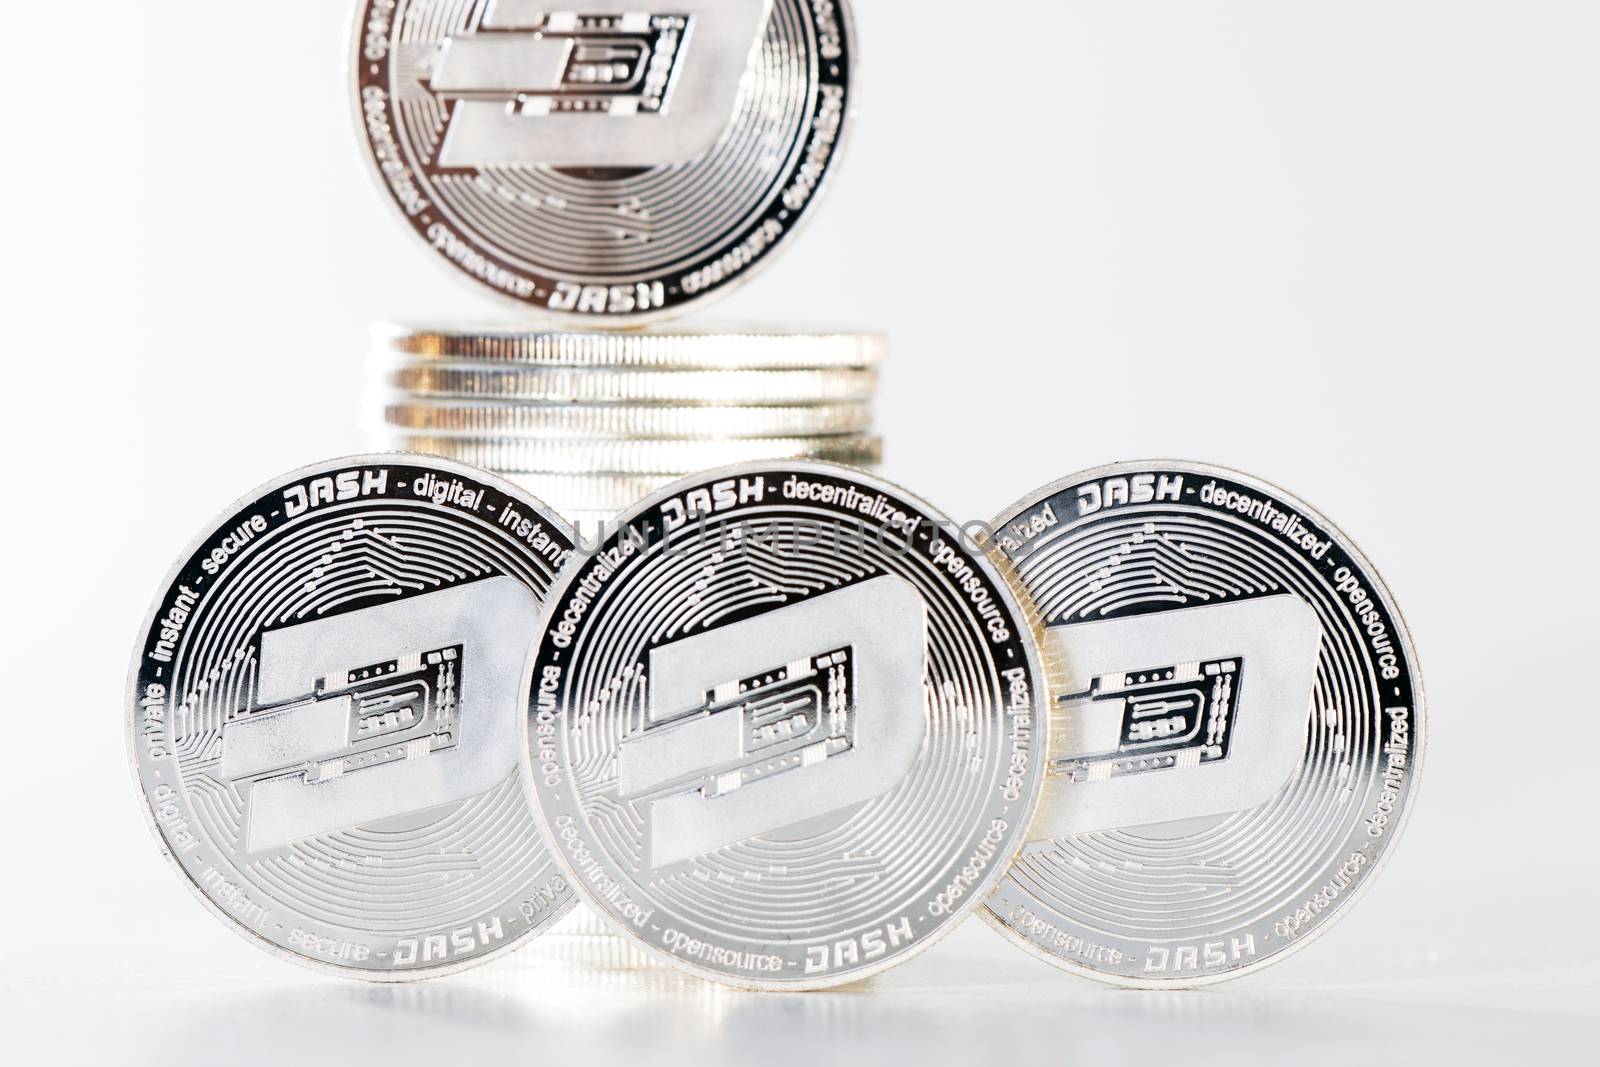 Shiny dash coins by membio